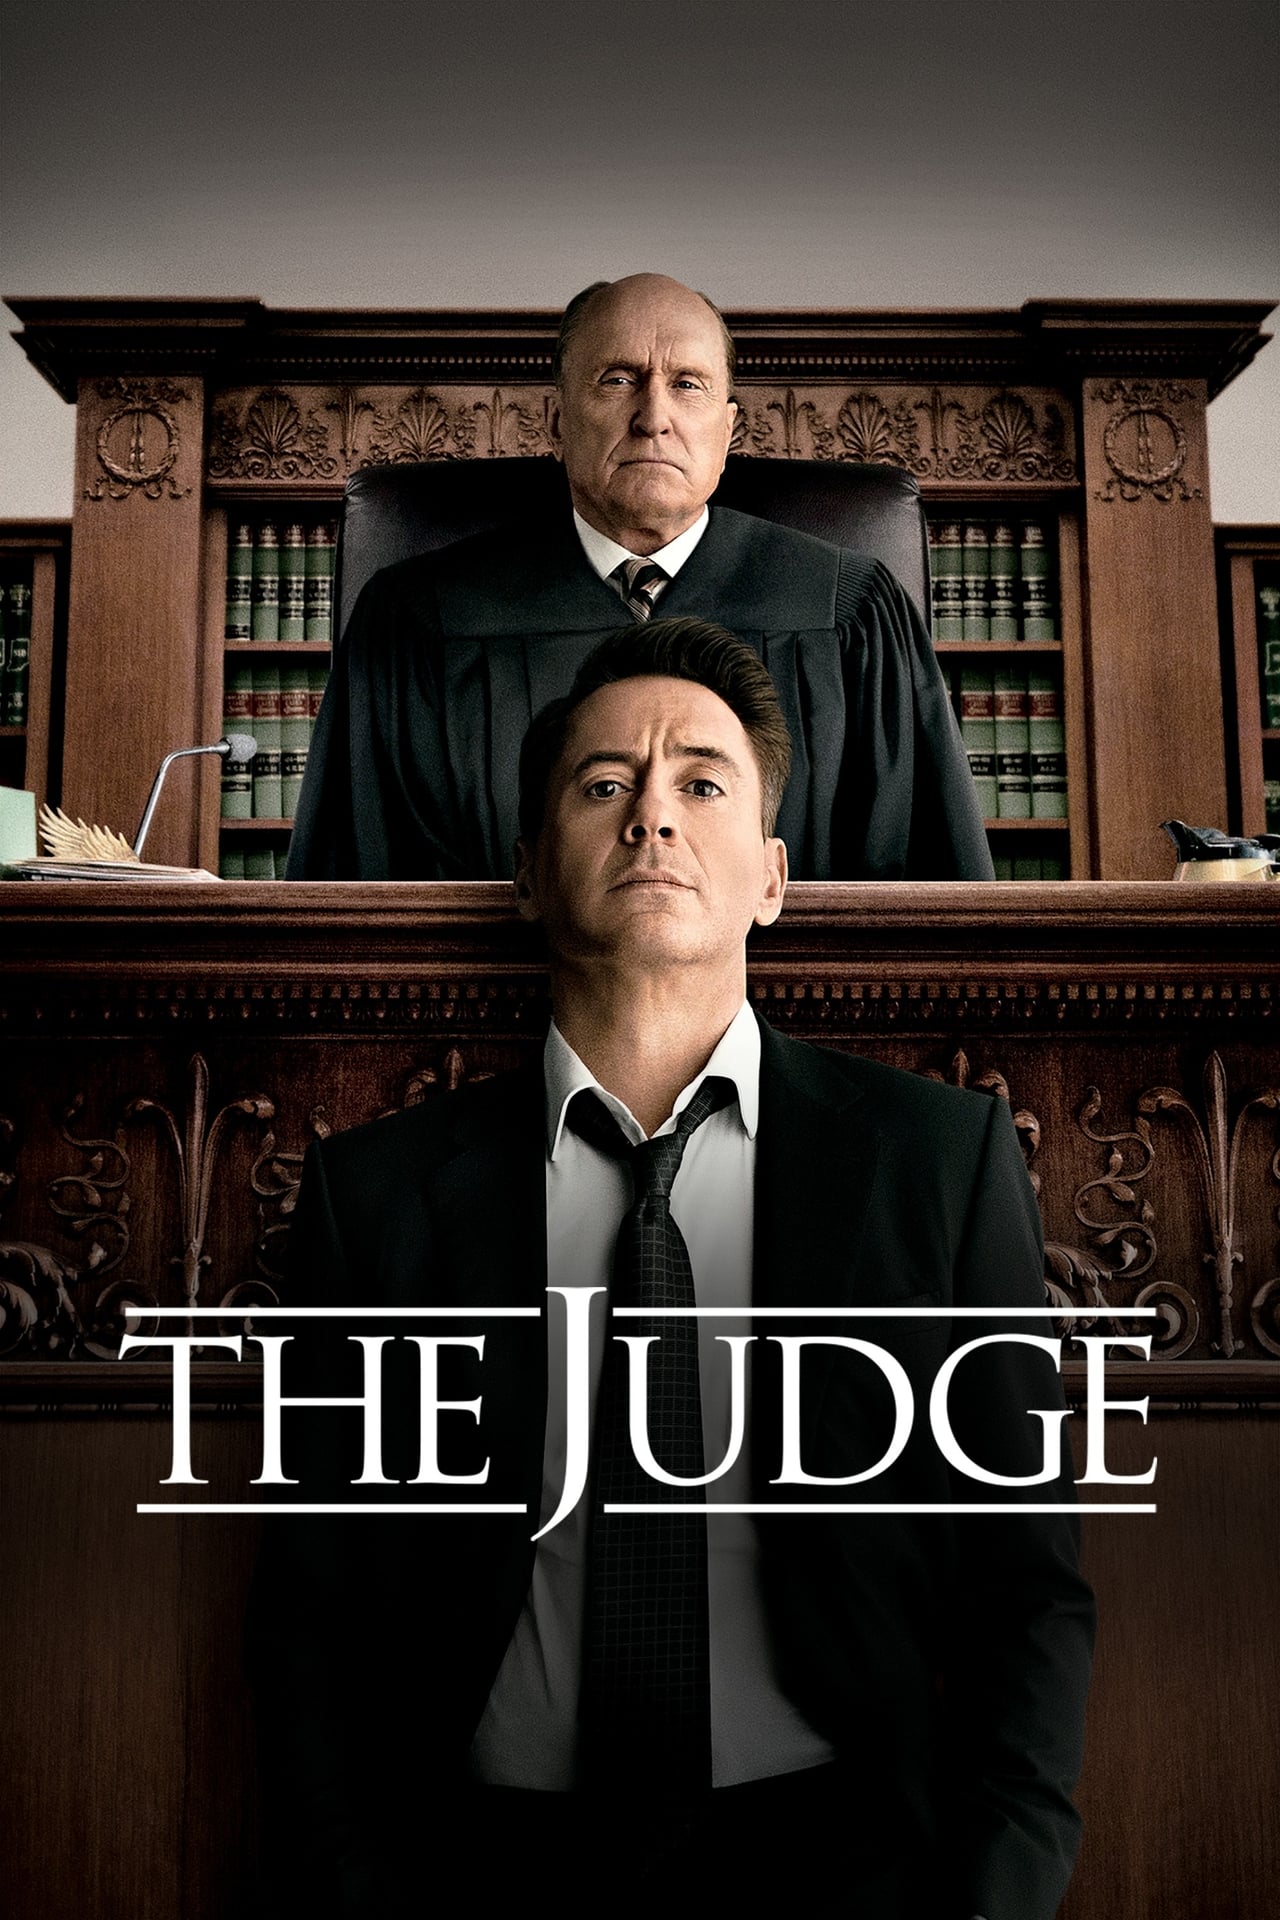 The Judge on Netflix